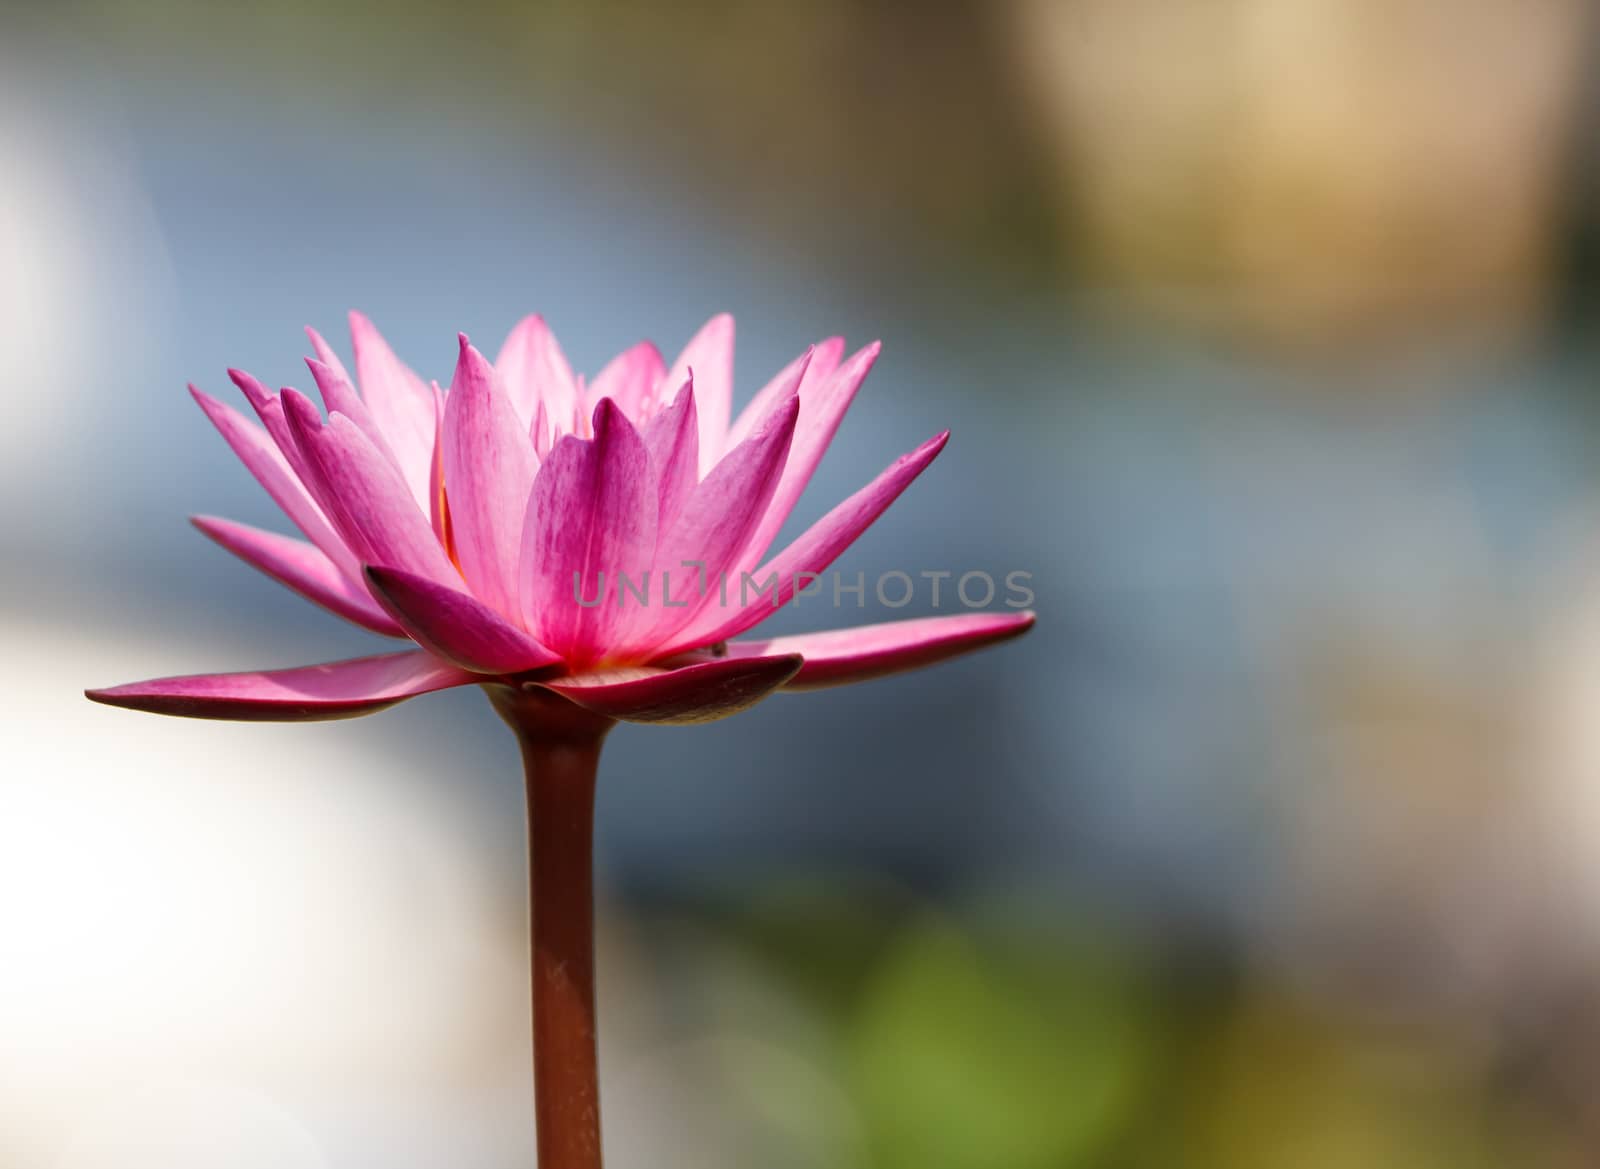 Beautiful pink lotus flower blossom